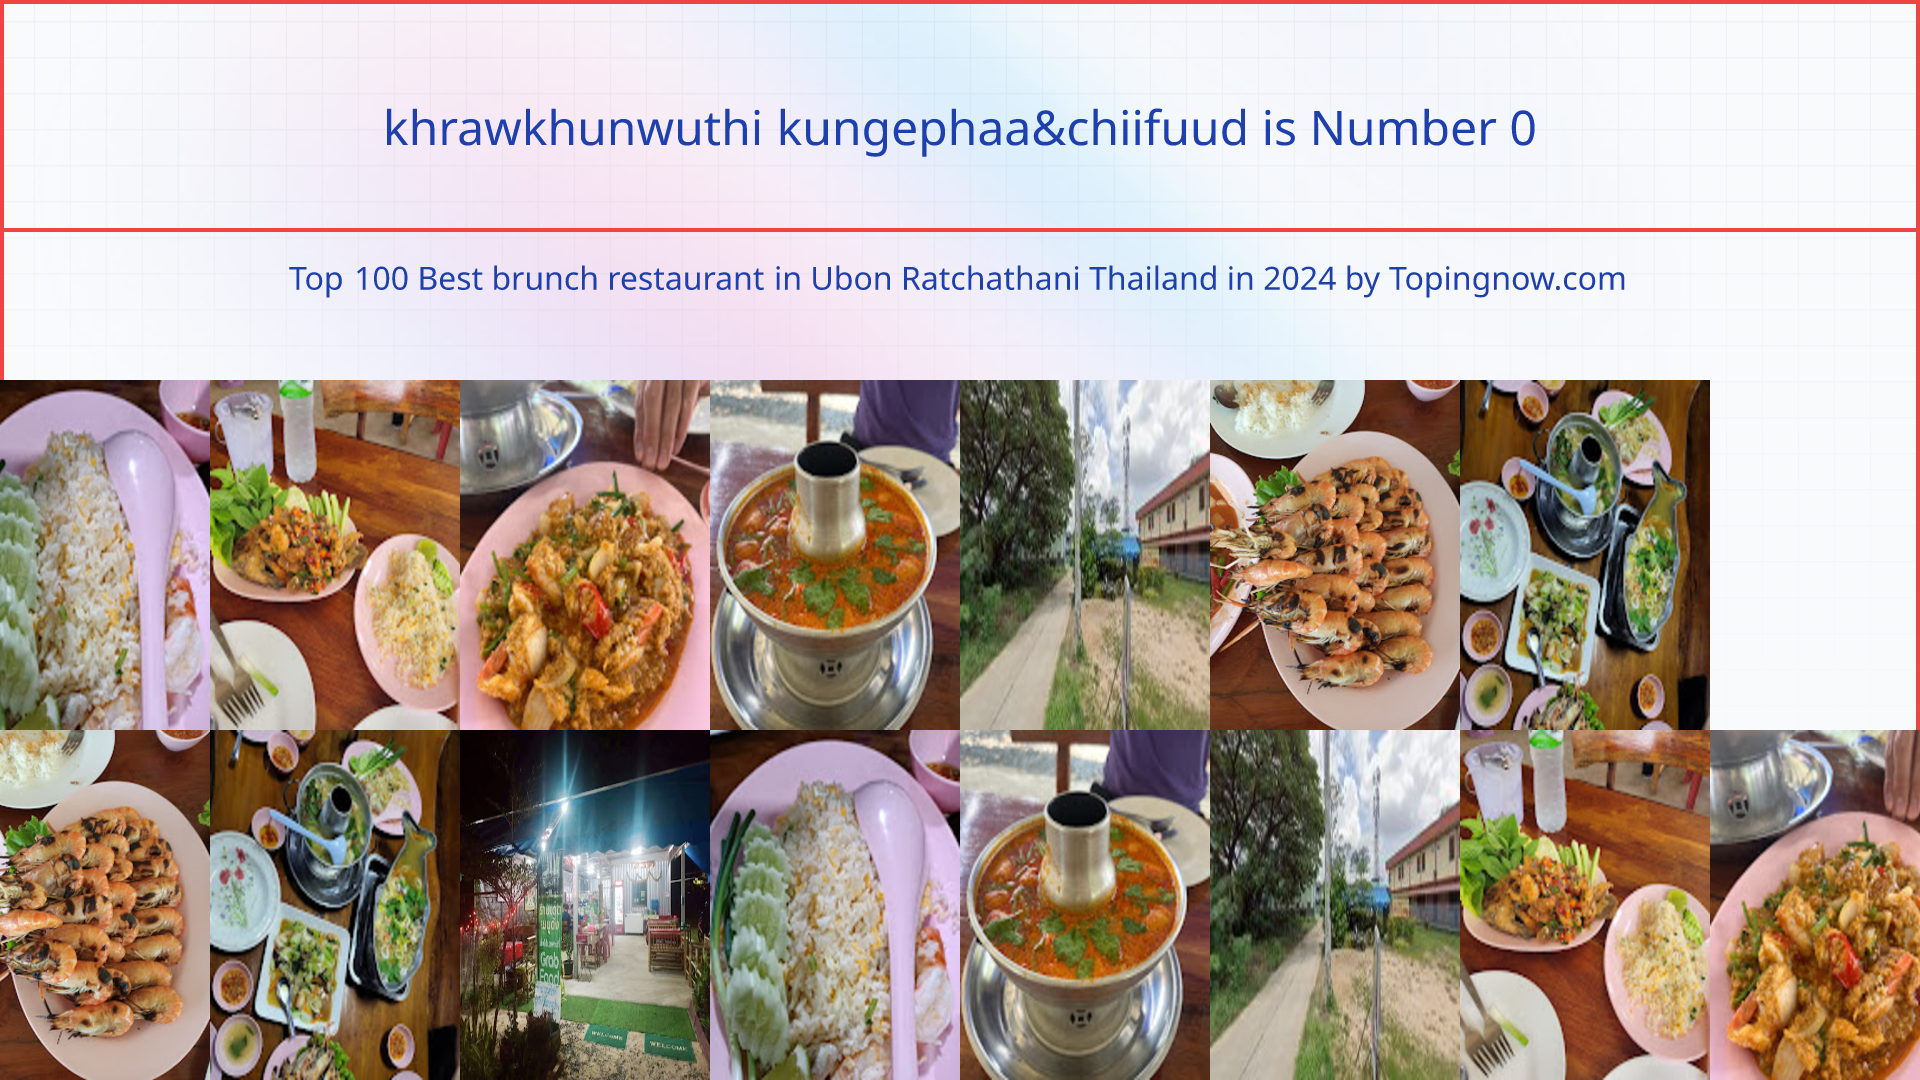 khrawkhunwuthi kungephaa&chiifuud: Top 100 Best brunch restaurant in Ubon Ratchathani Thailand in 2024